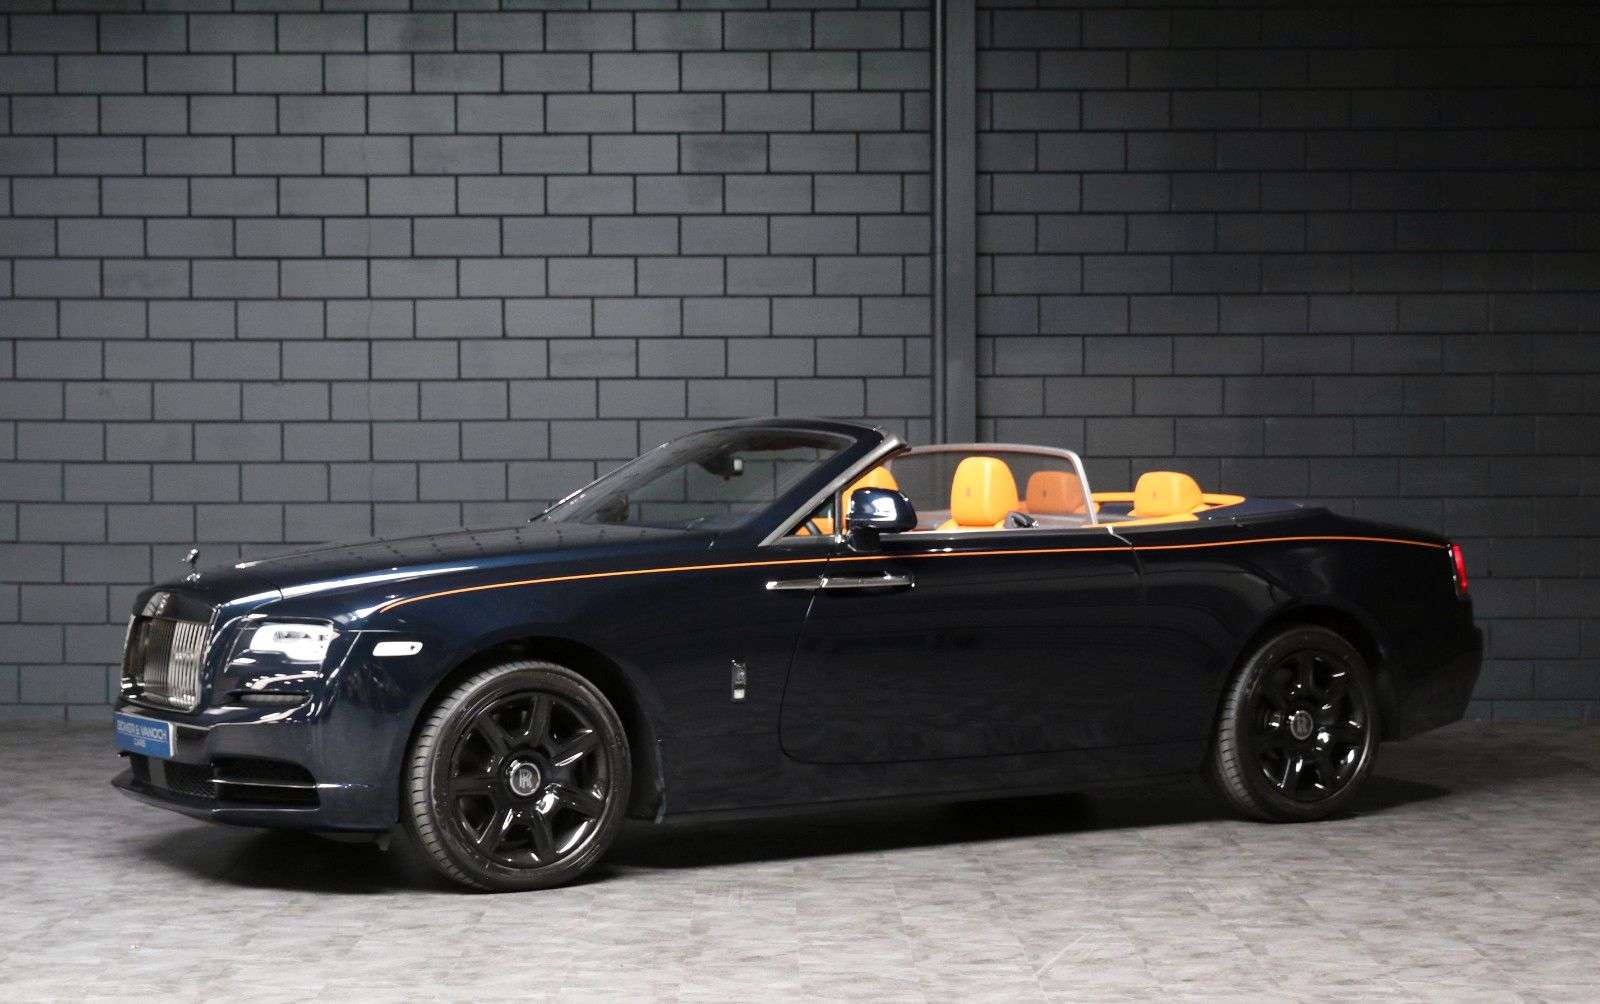 Rolls-Royce Dawn Convertible in Black used in Bad Bentheim-Westenberg for € 429,950.-